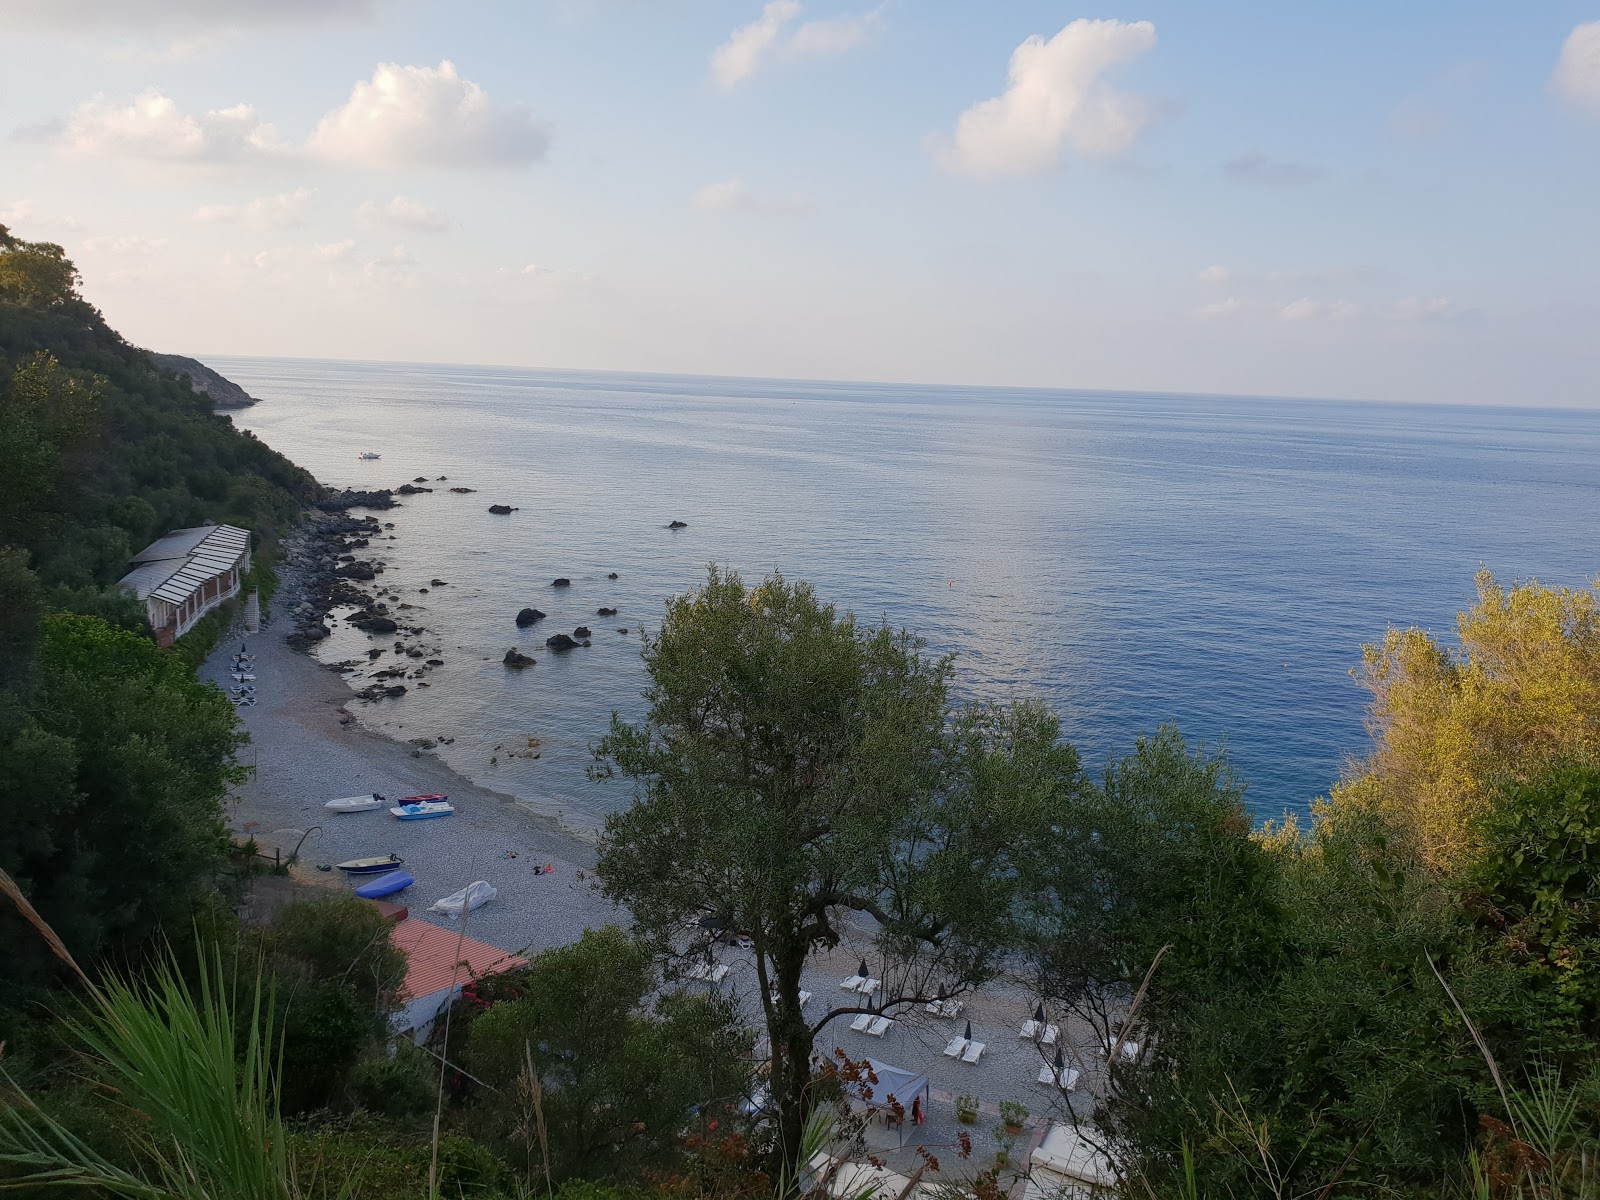 Fotografija Spiaggia Brignulari z turkizna čista voda površino